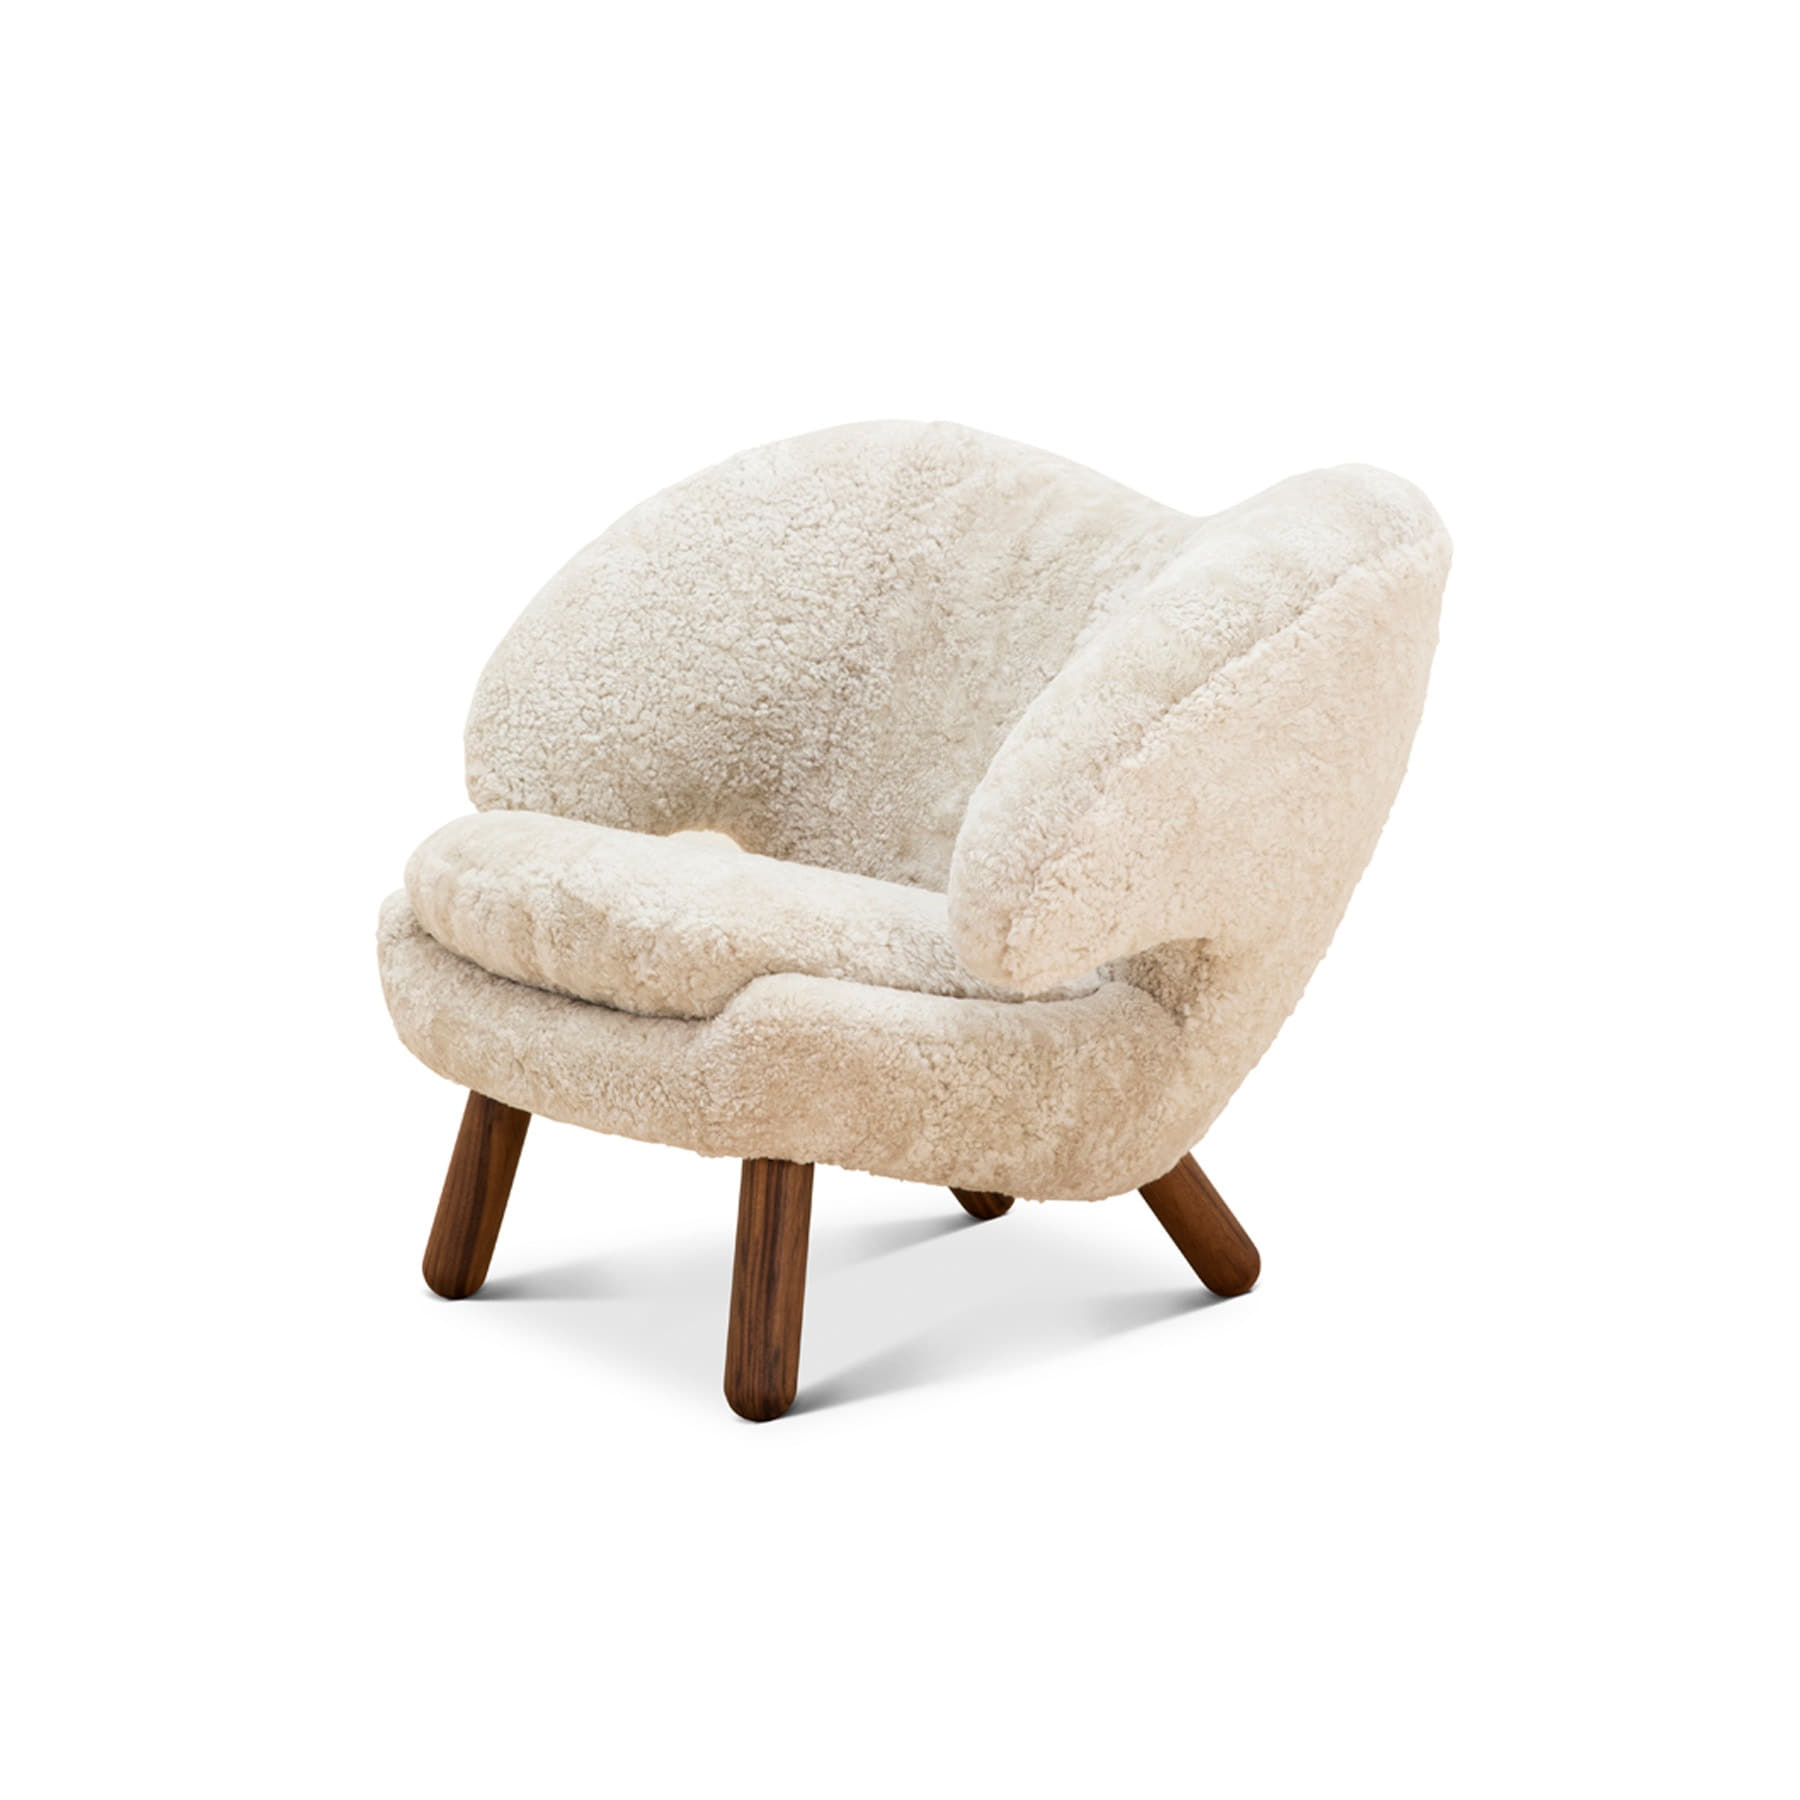 House of Finn Juhl Pelican Chair Sheep Skin 하우스 오브 핀율 펠리칸 라운지 체어(양가죽) 색상 선택